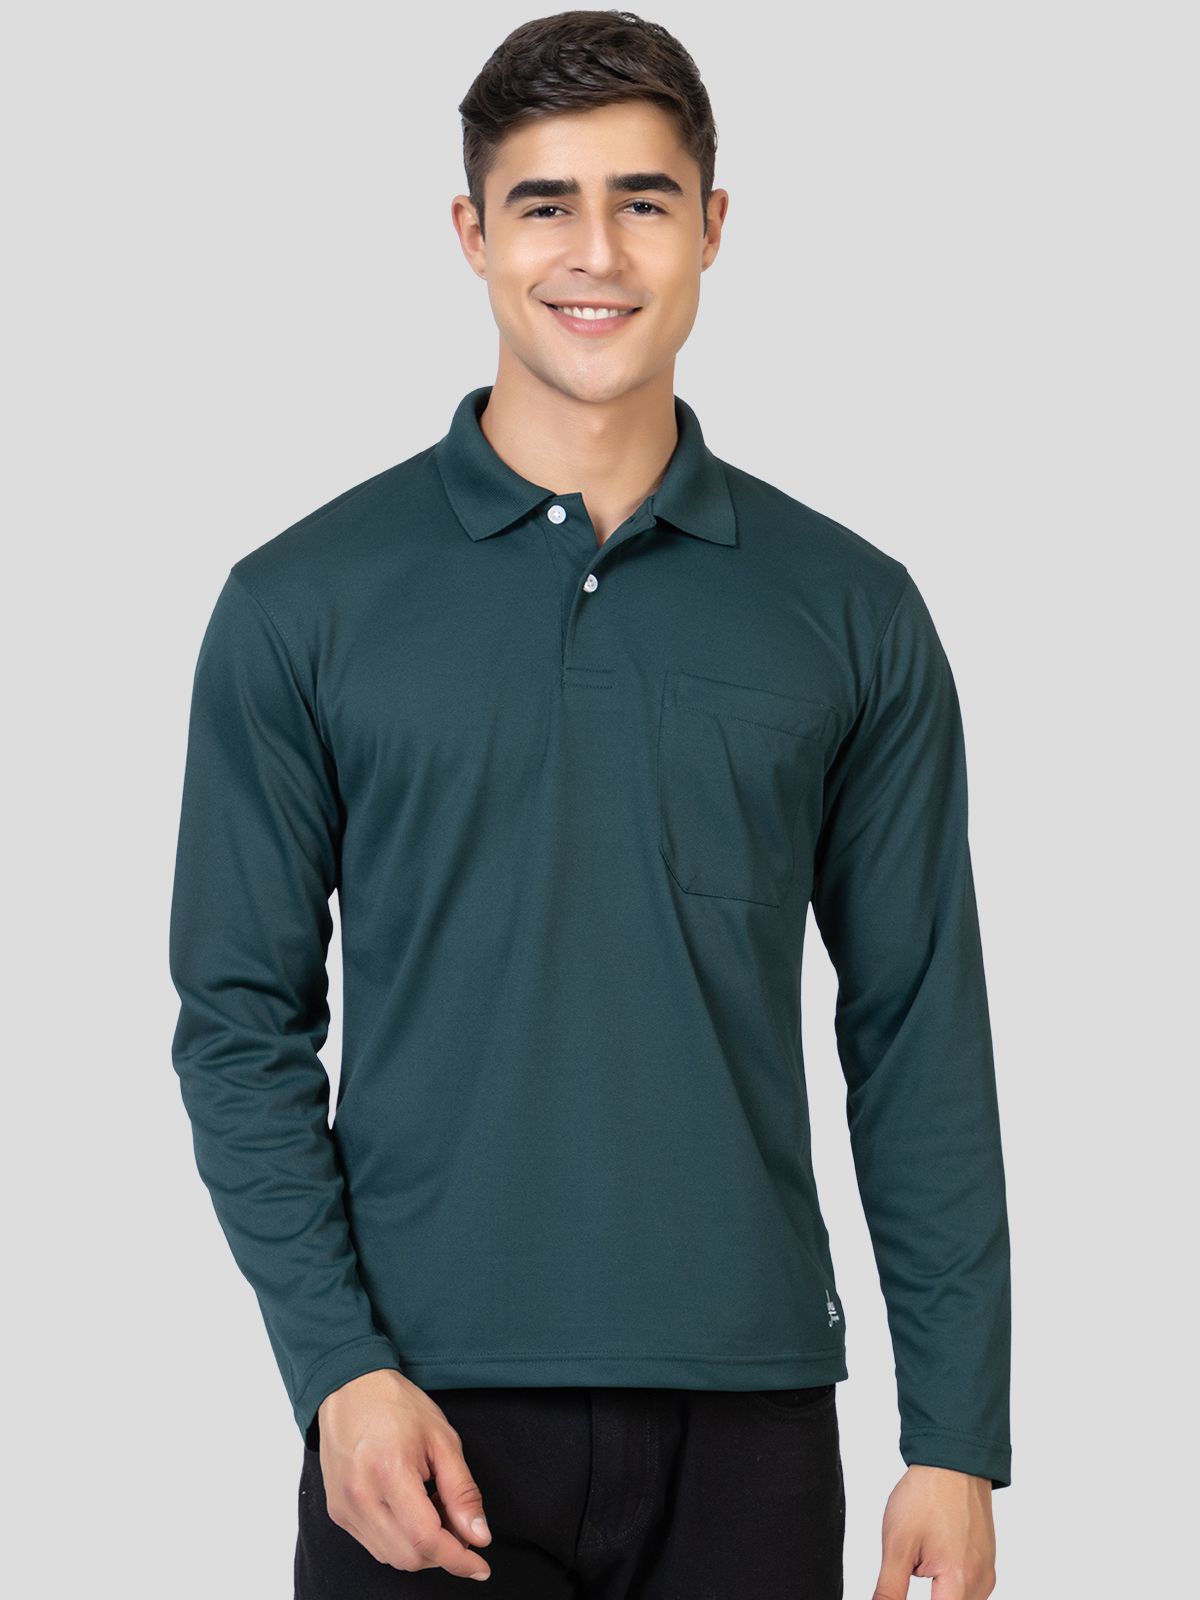     			YHA - Dark Green Cotton Blend Regular Fit Men's Polo T Shirt ( Pack of 1 )